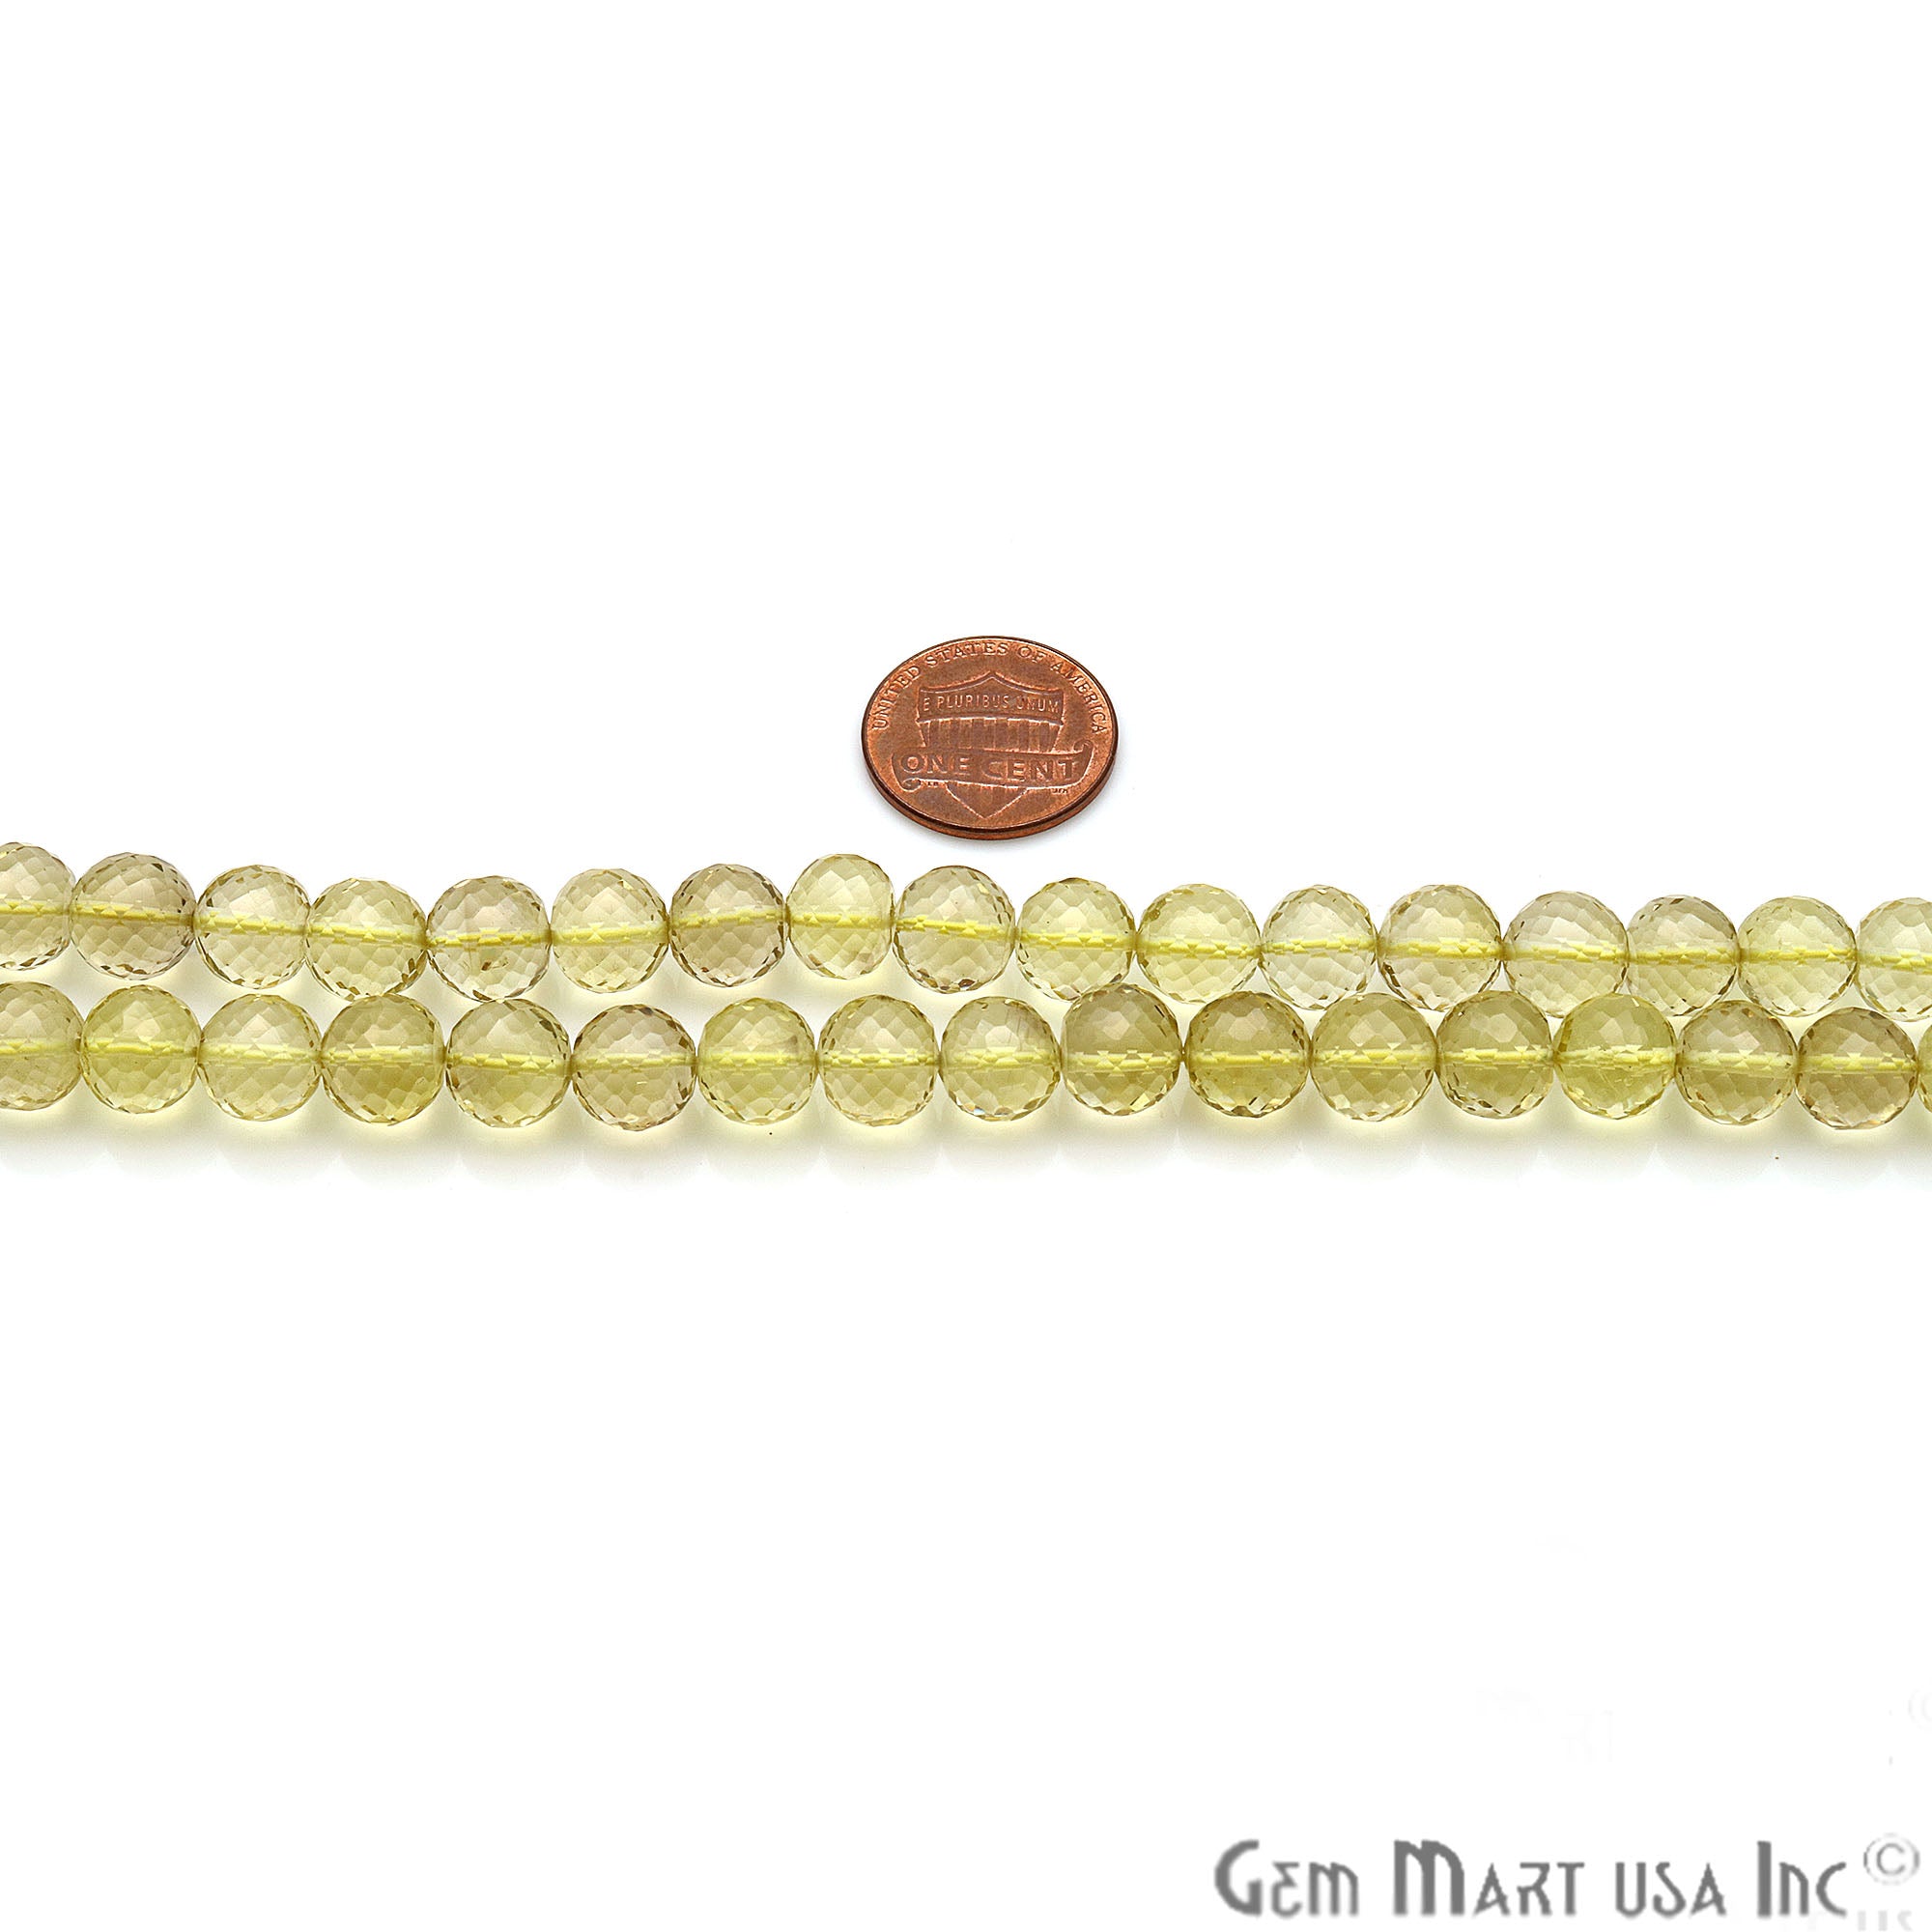 Lemon Topaz Round 8-9mm Crafting Beads Gemstone Strands 16INCH - GemMartUSA